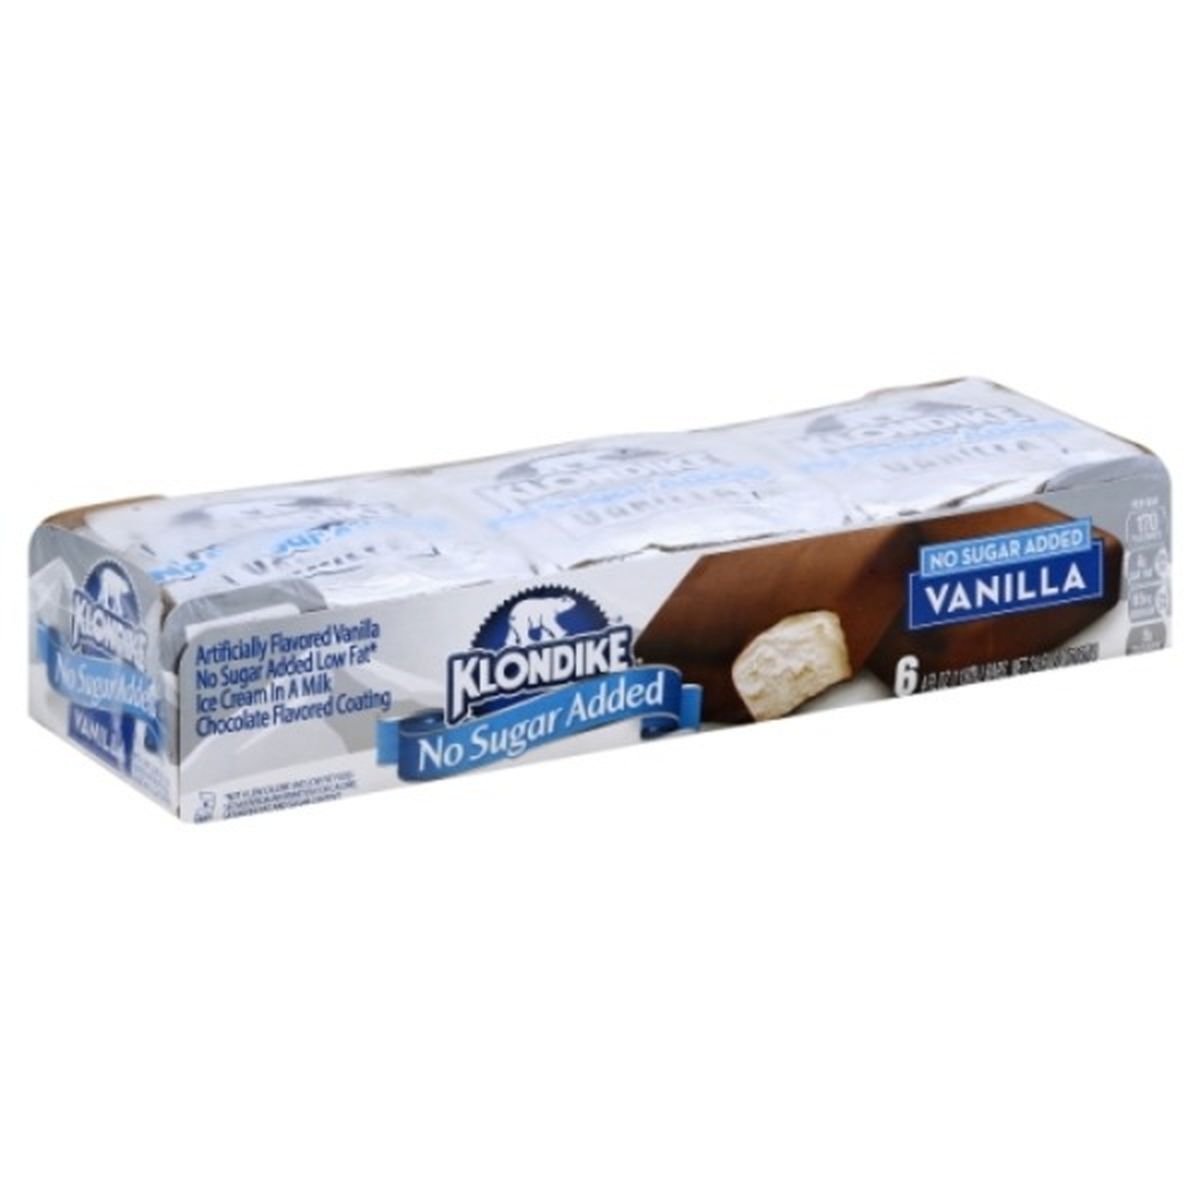 Calories in Klondike No Sugar Added Ice Cream Bars, Vanilla